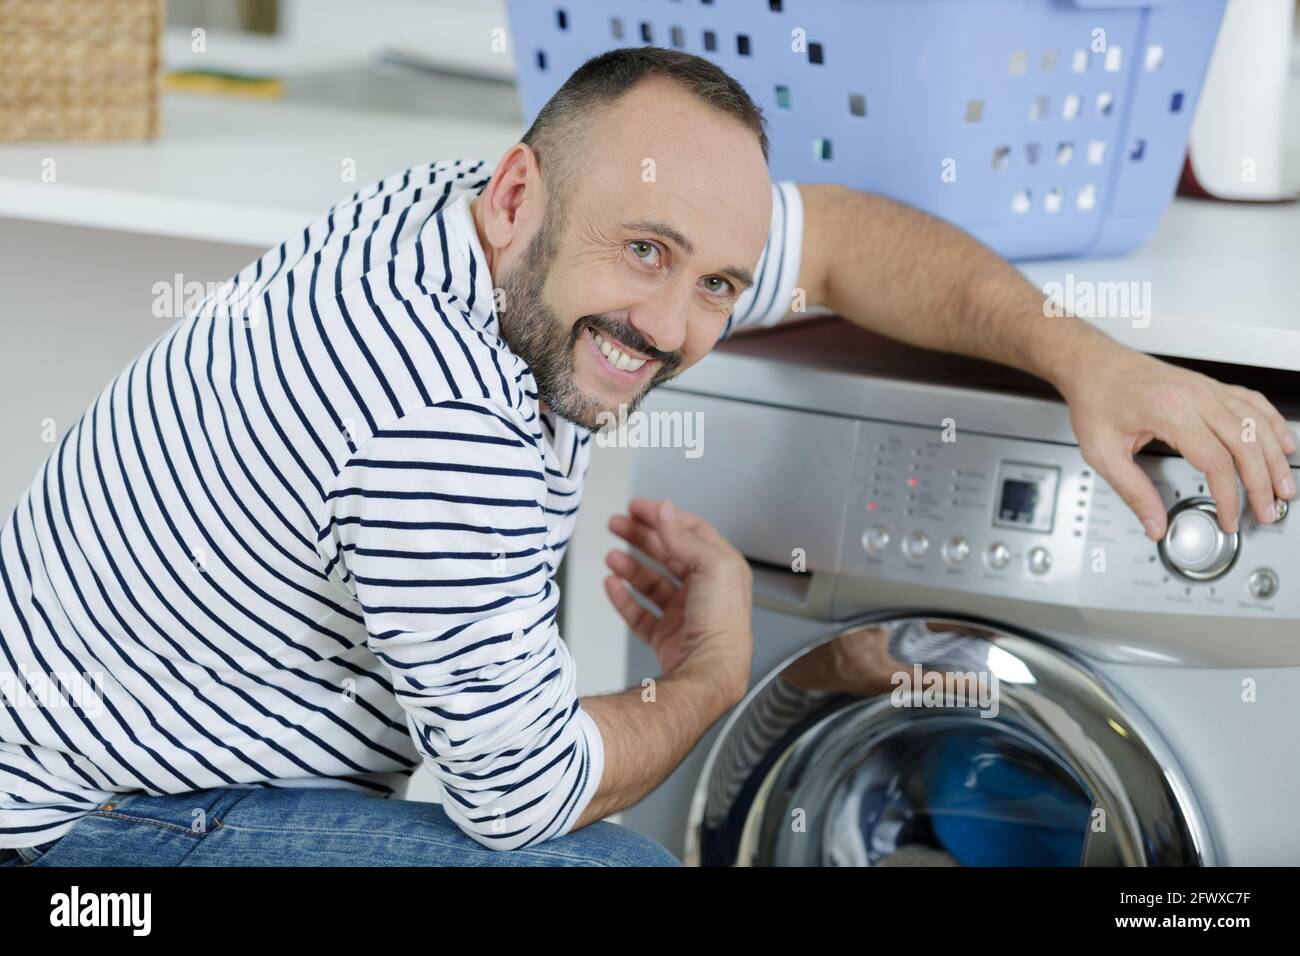 man using washing machine in kitchen Stock Photo